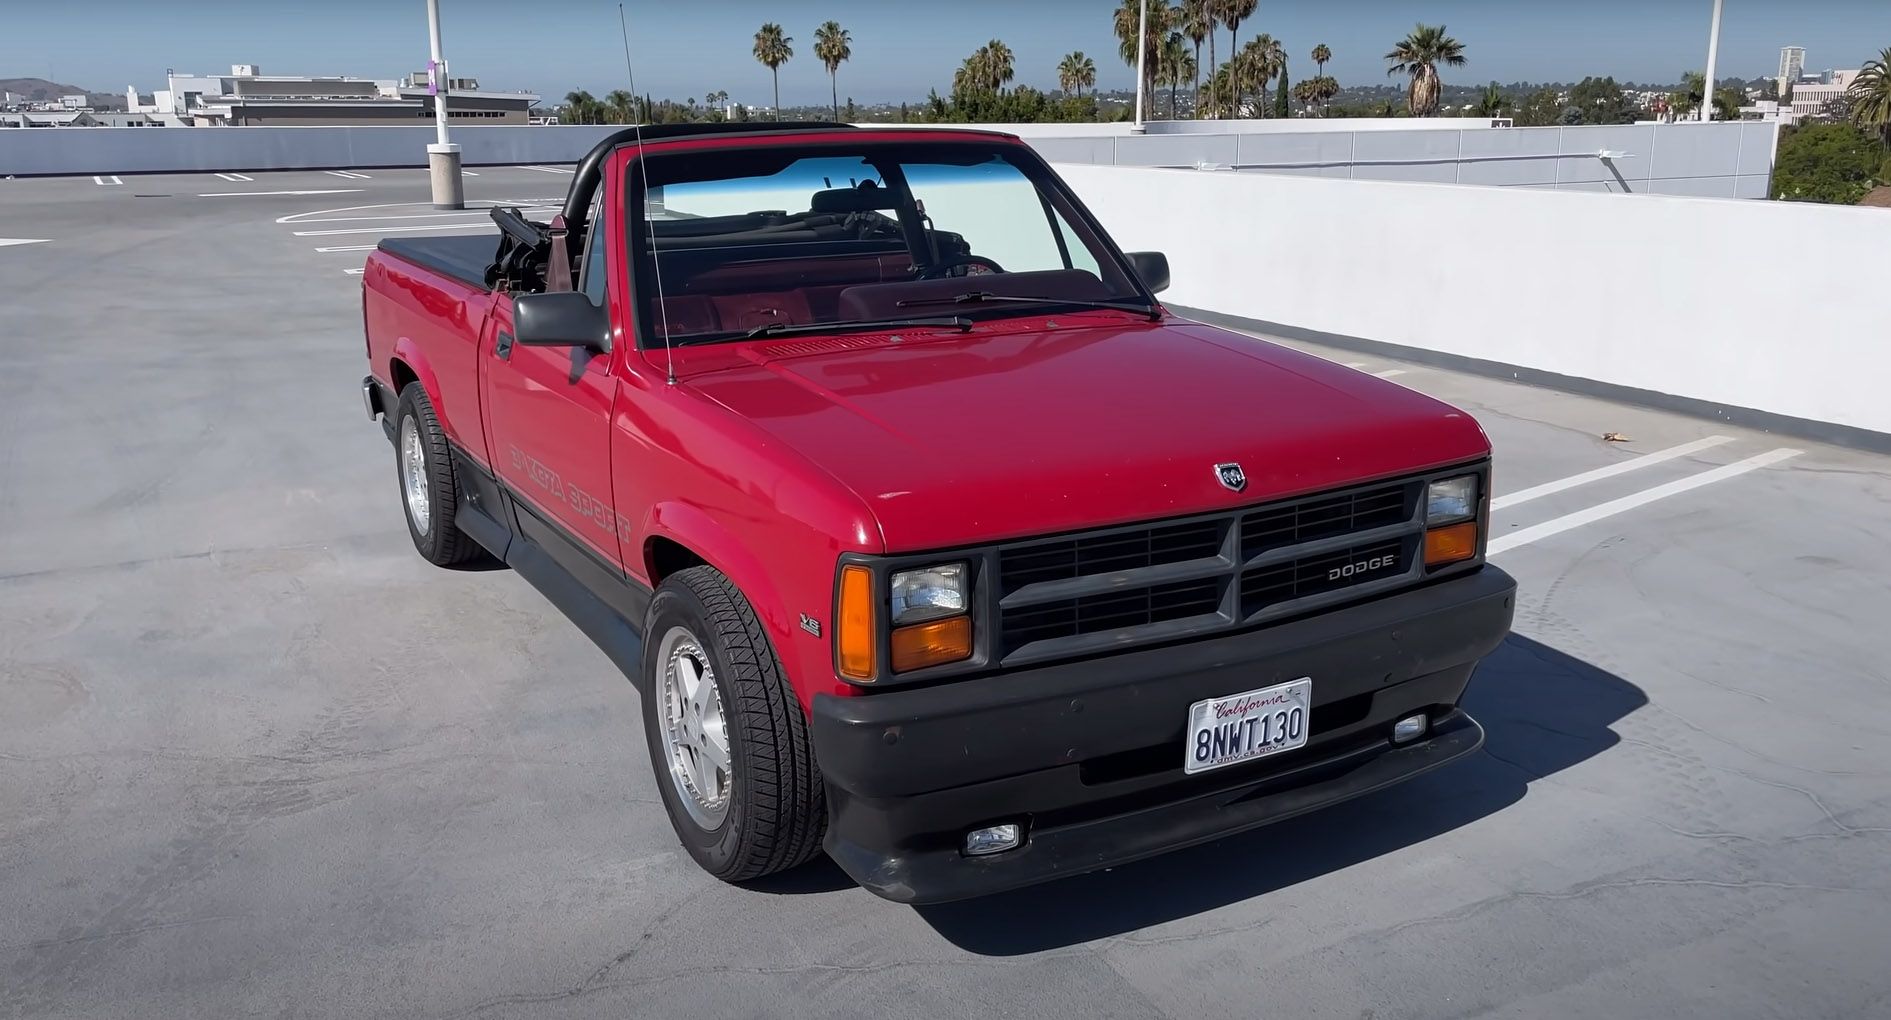 Red 1989 Dodge Dakota Sport Convertible in parking lot